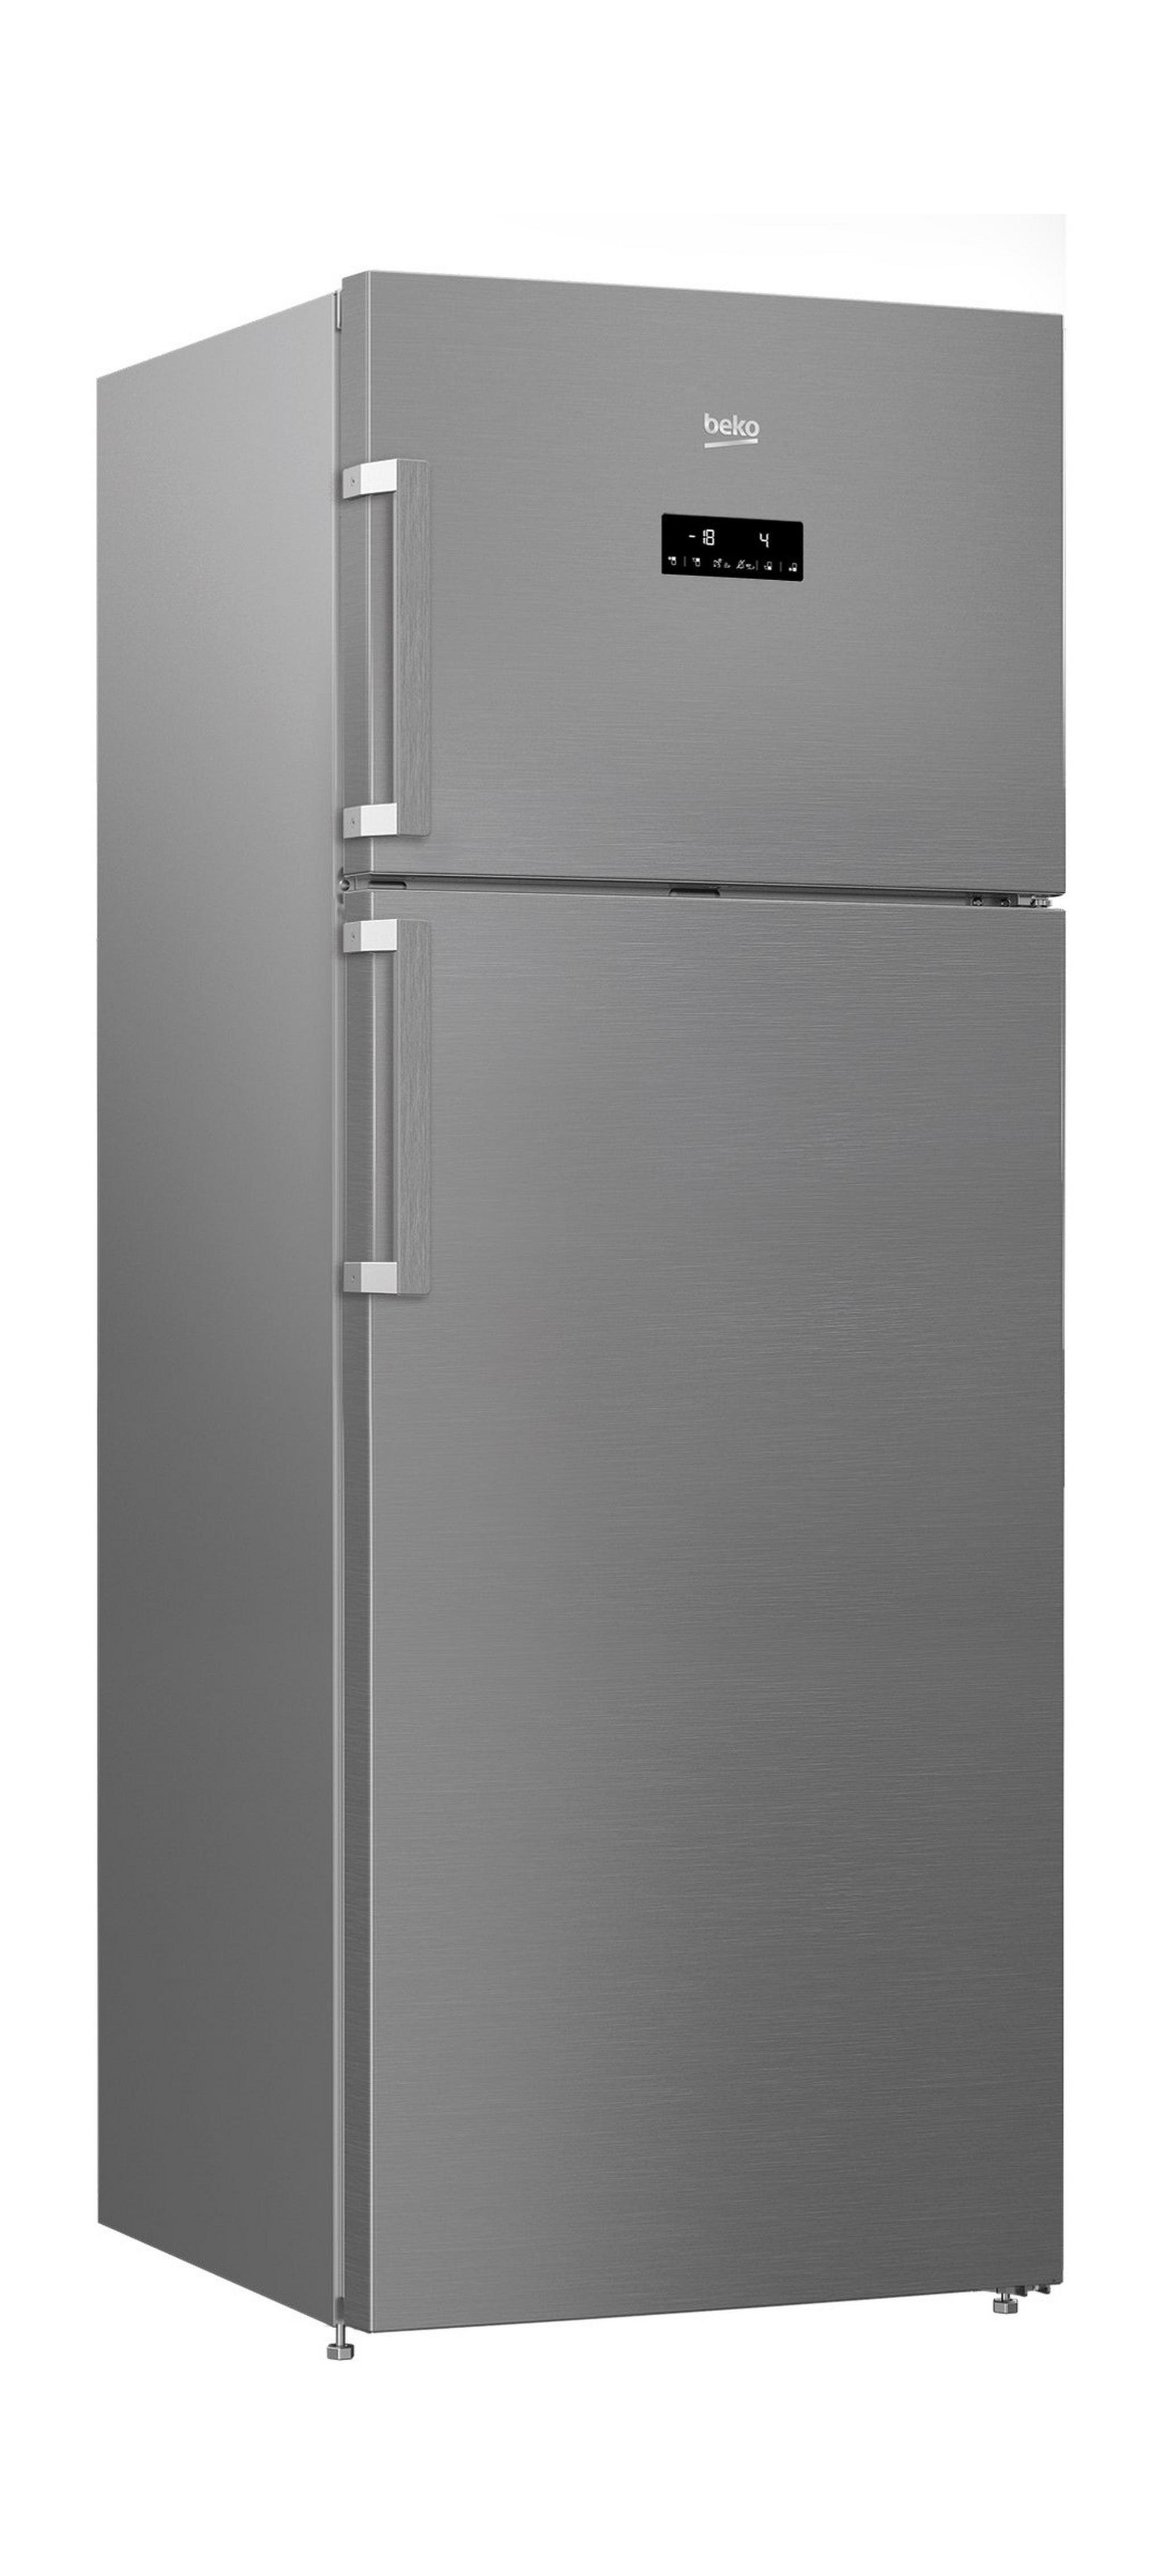 Beko 17.8 CFt Top Mount Refrigerator - (RDNE550K21ZPX)